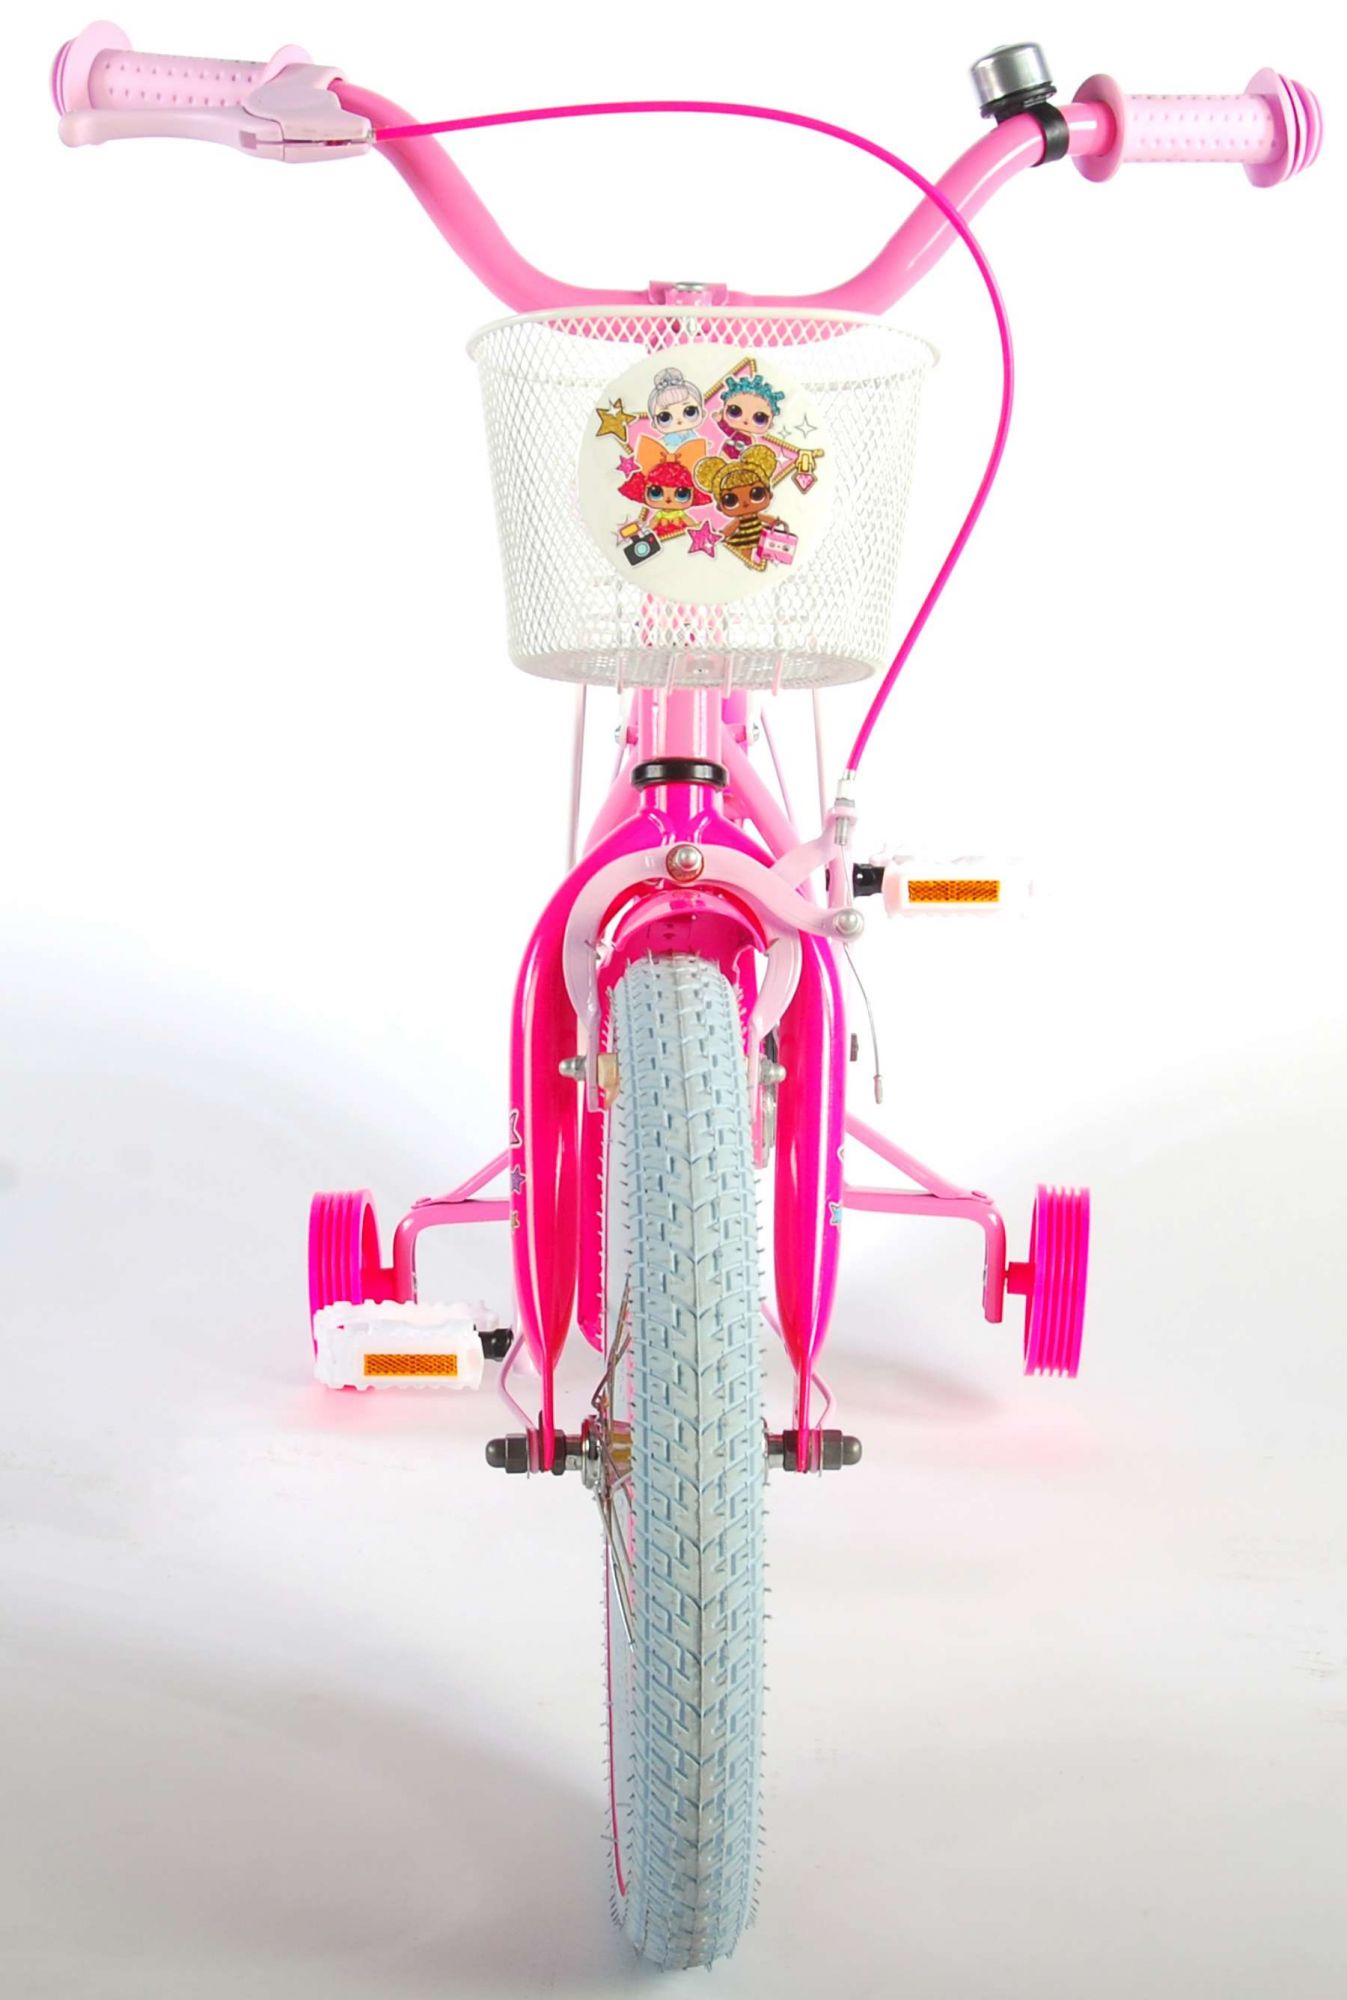 16 Zoll Fahrrad Rücktrittbremse Stützräder Korb Kinderfahrrad Mädchen Pink LOL 